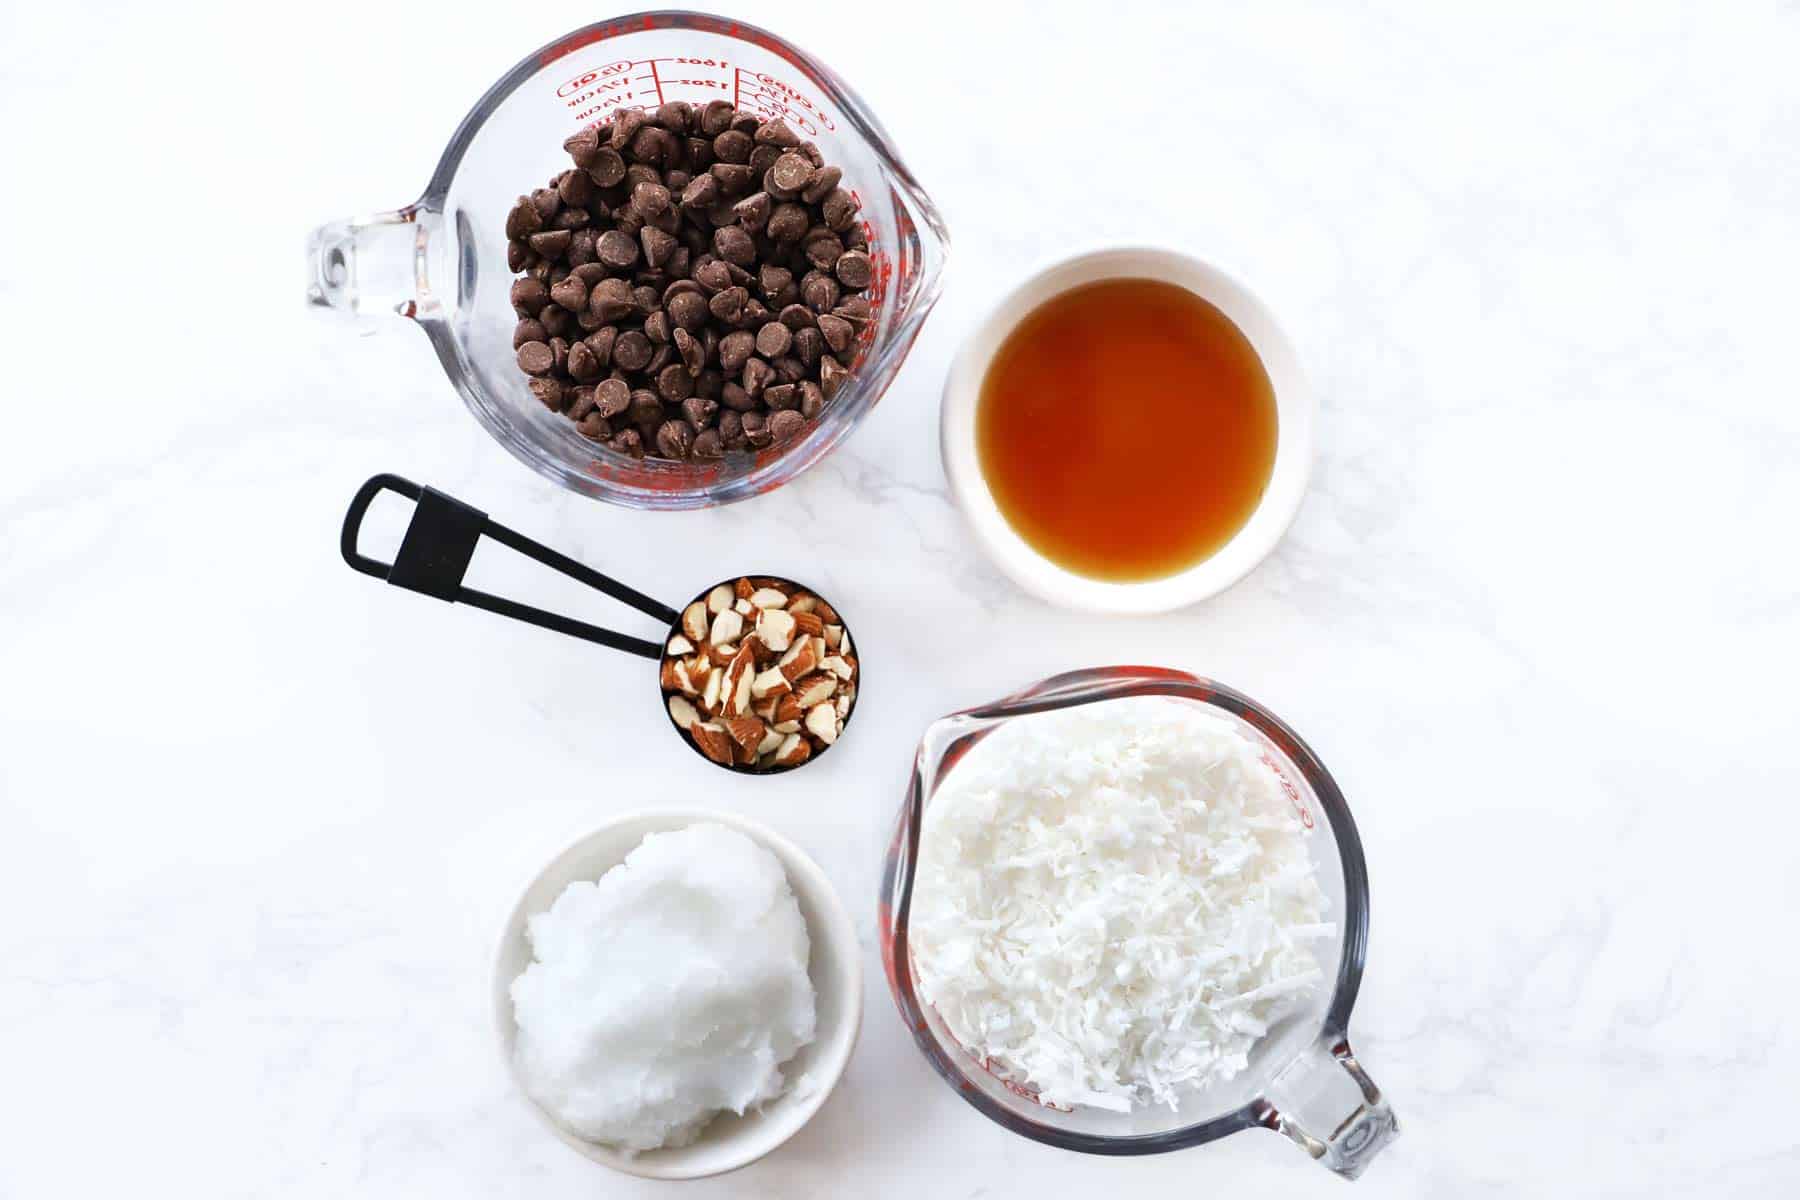 Ingredients for chocolate coconut bites. 